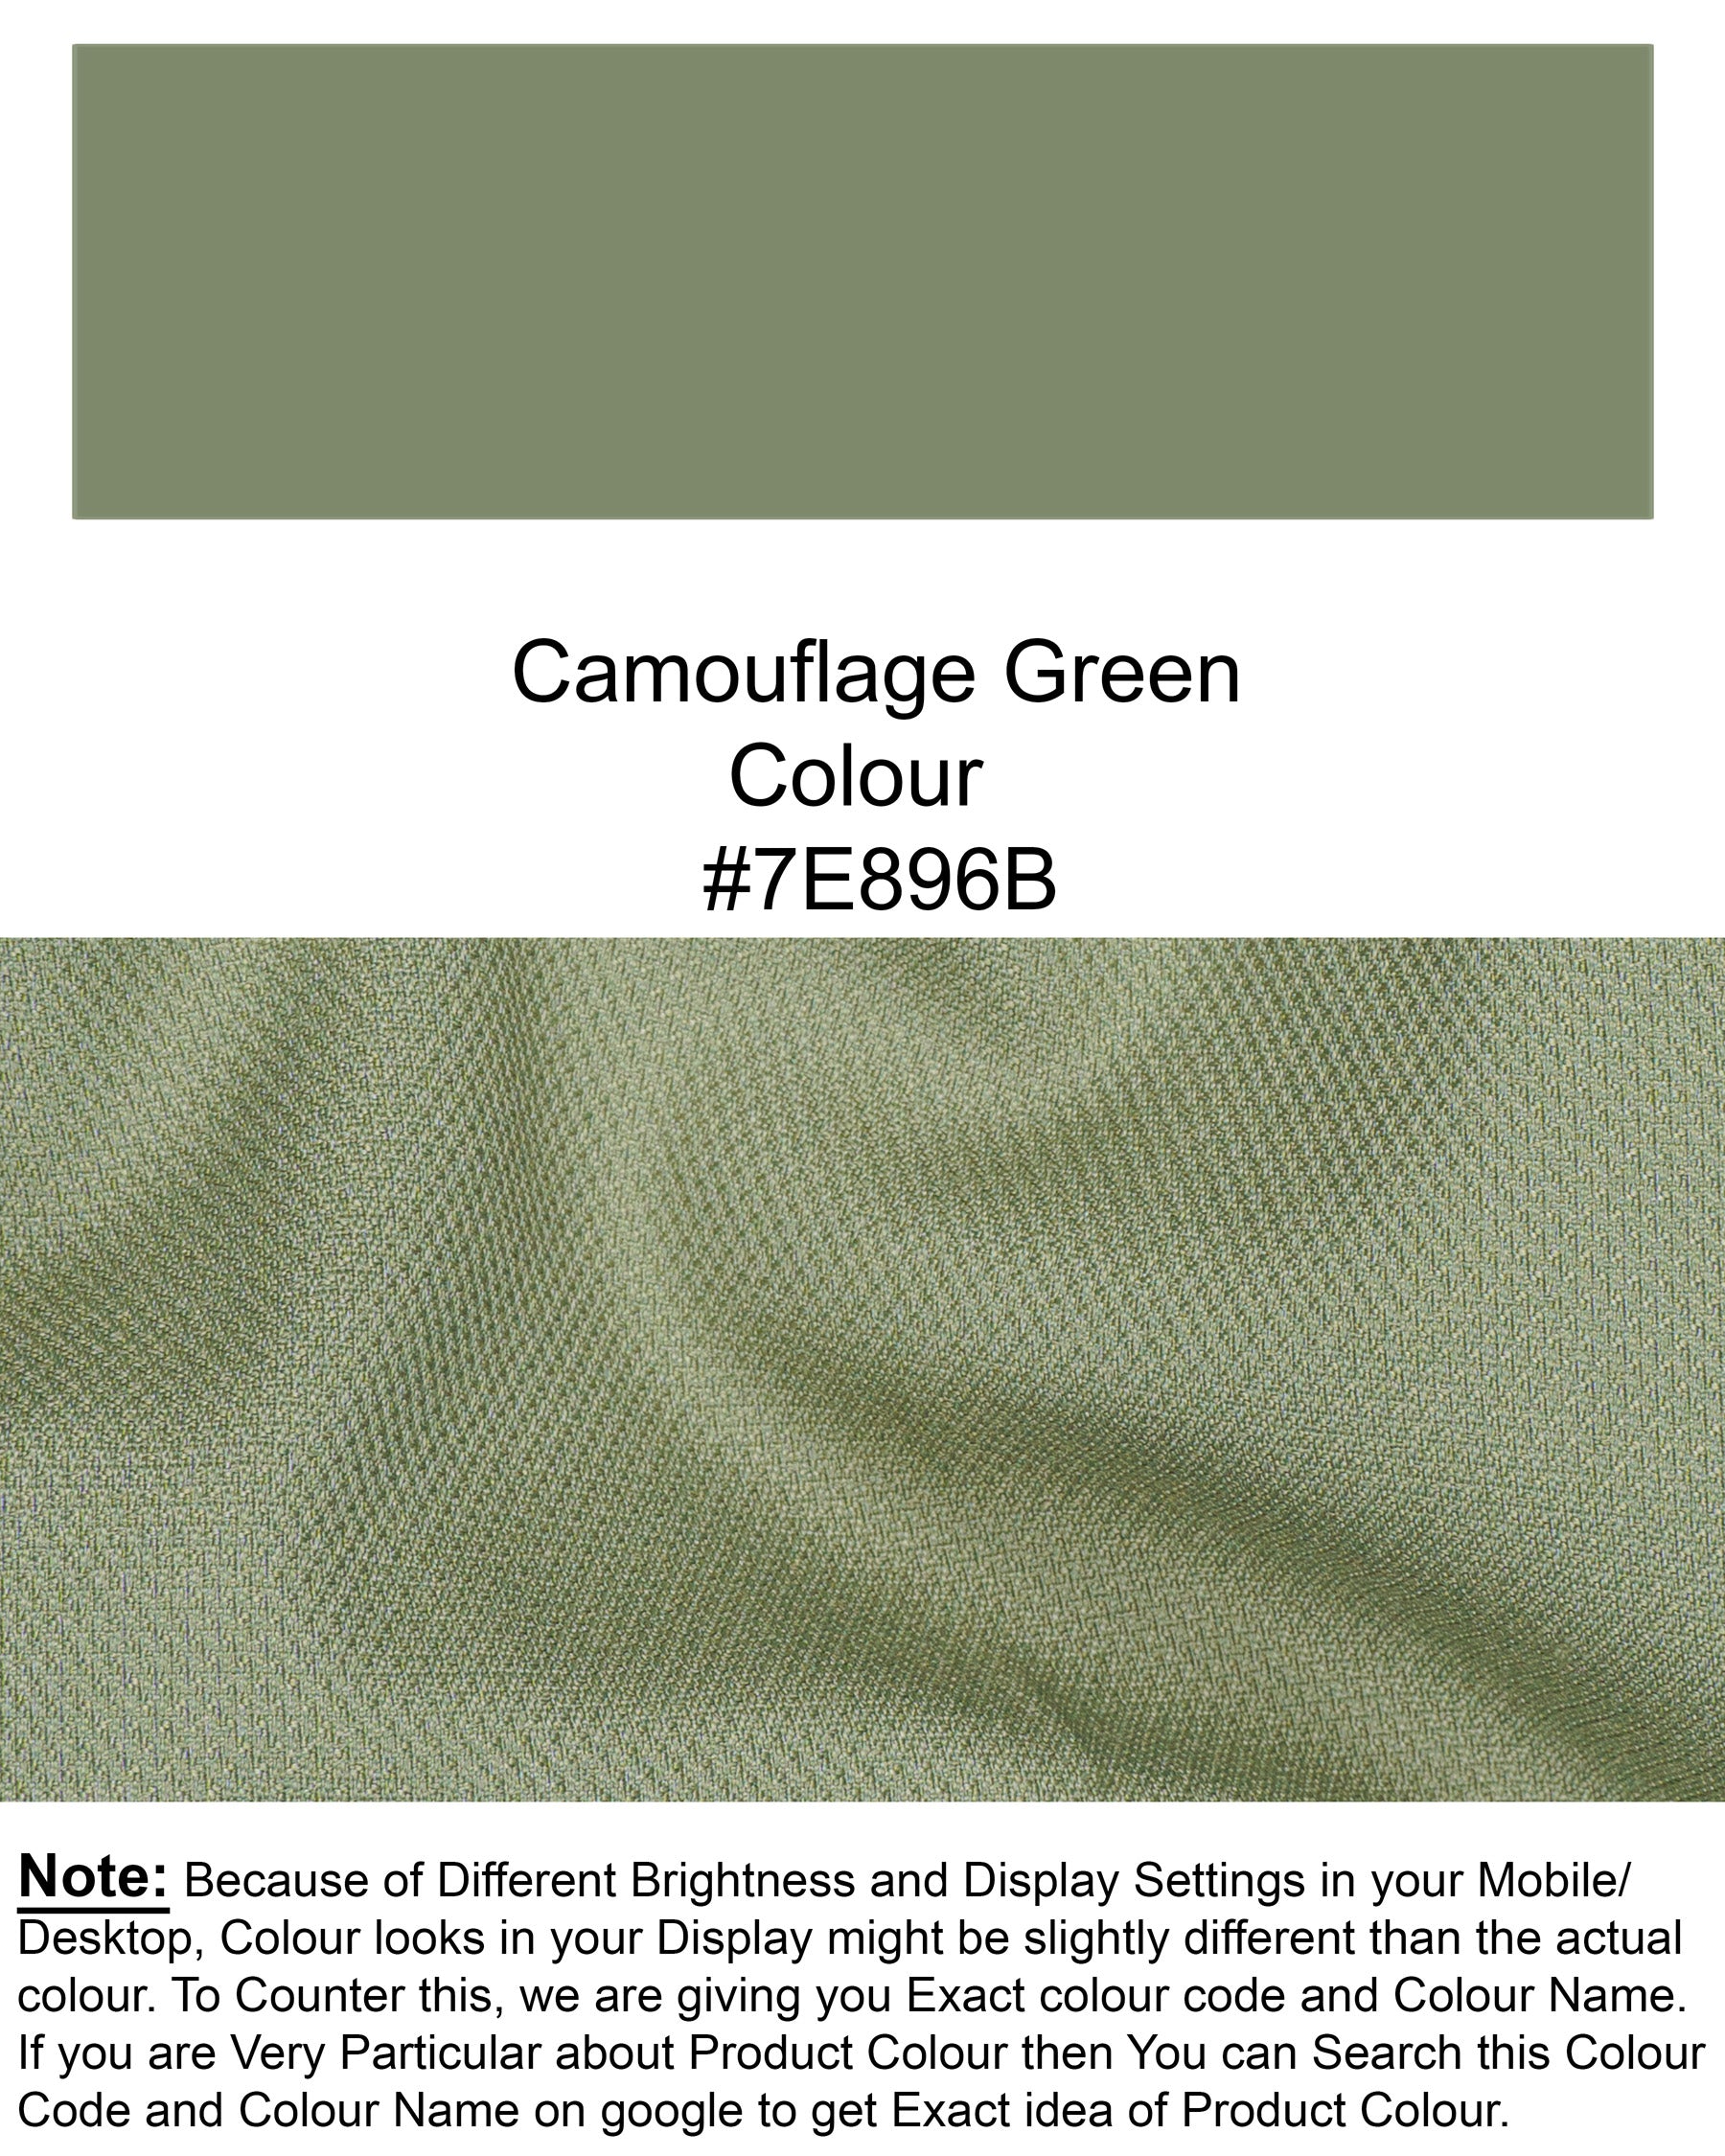 Camouflage Green Cross Buttoned Bandhgala Wool rich Suit ST1437-CBG-36,ST1437-CBG-38,ST1437-CBG-40,ST1437-CBG-42,ST1437-CBG-44,ST1437-CBG-46,ST1437-CBG-48,ST1437-CBG-50,ST1437-CBG-52,ST1437-CBG-54,ST1437-CBG-56,ST1437-CBG-58,ST1437-CBG-60